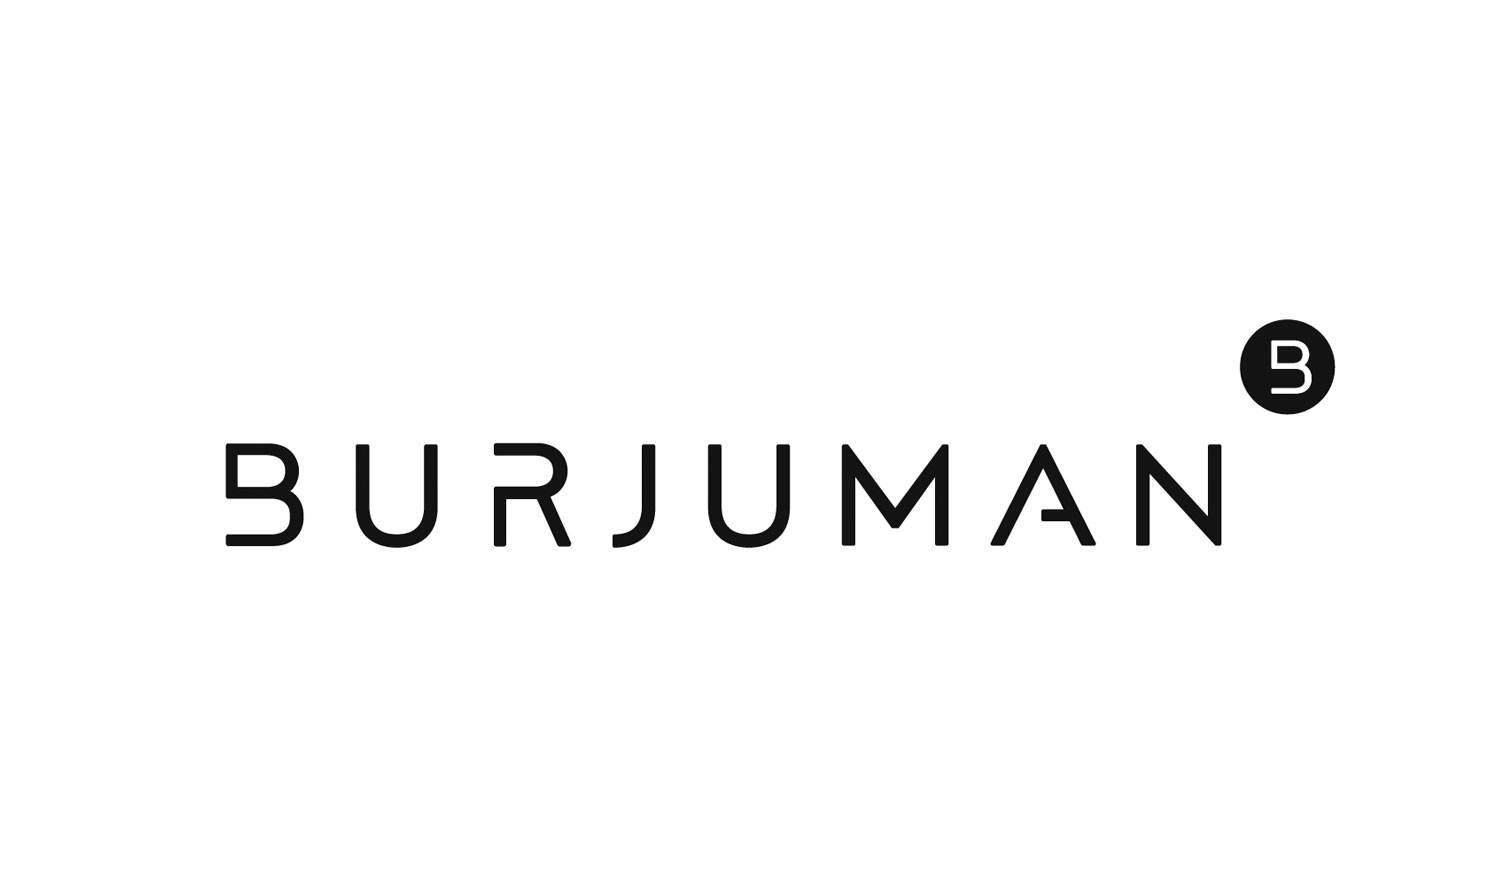 BurJuman-Evolution-of-Logos-13.jpg